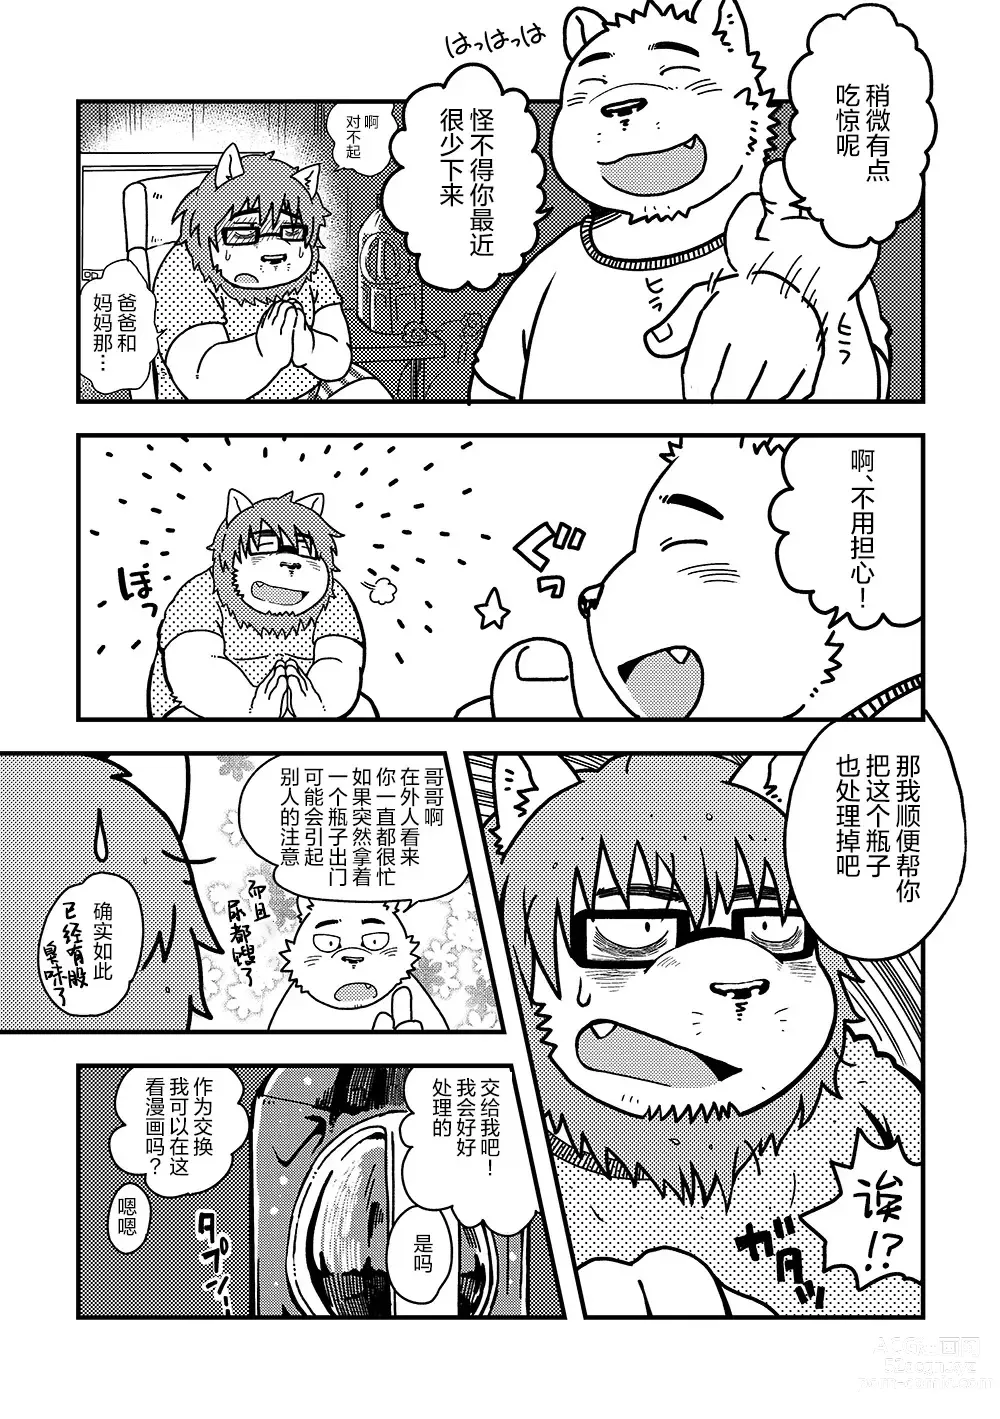 Page 5 of doujinshi 塑料瓶兄弟